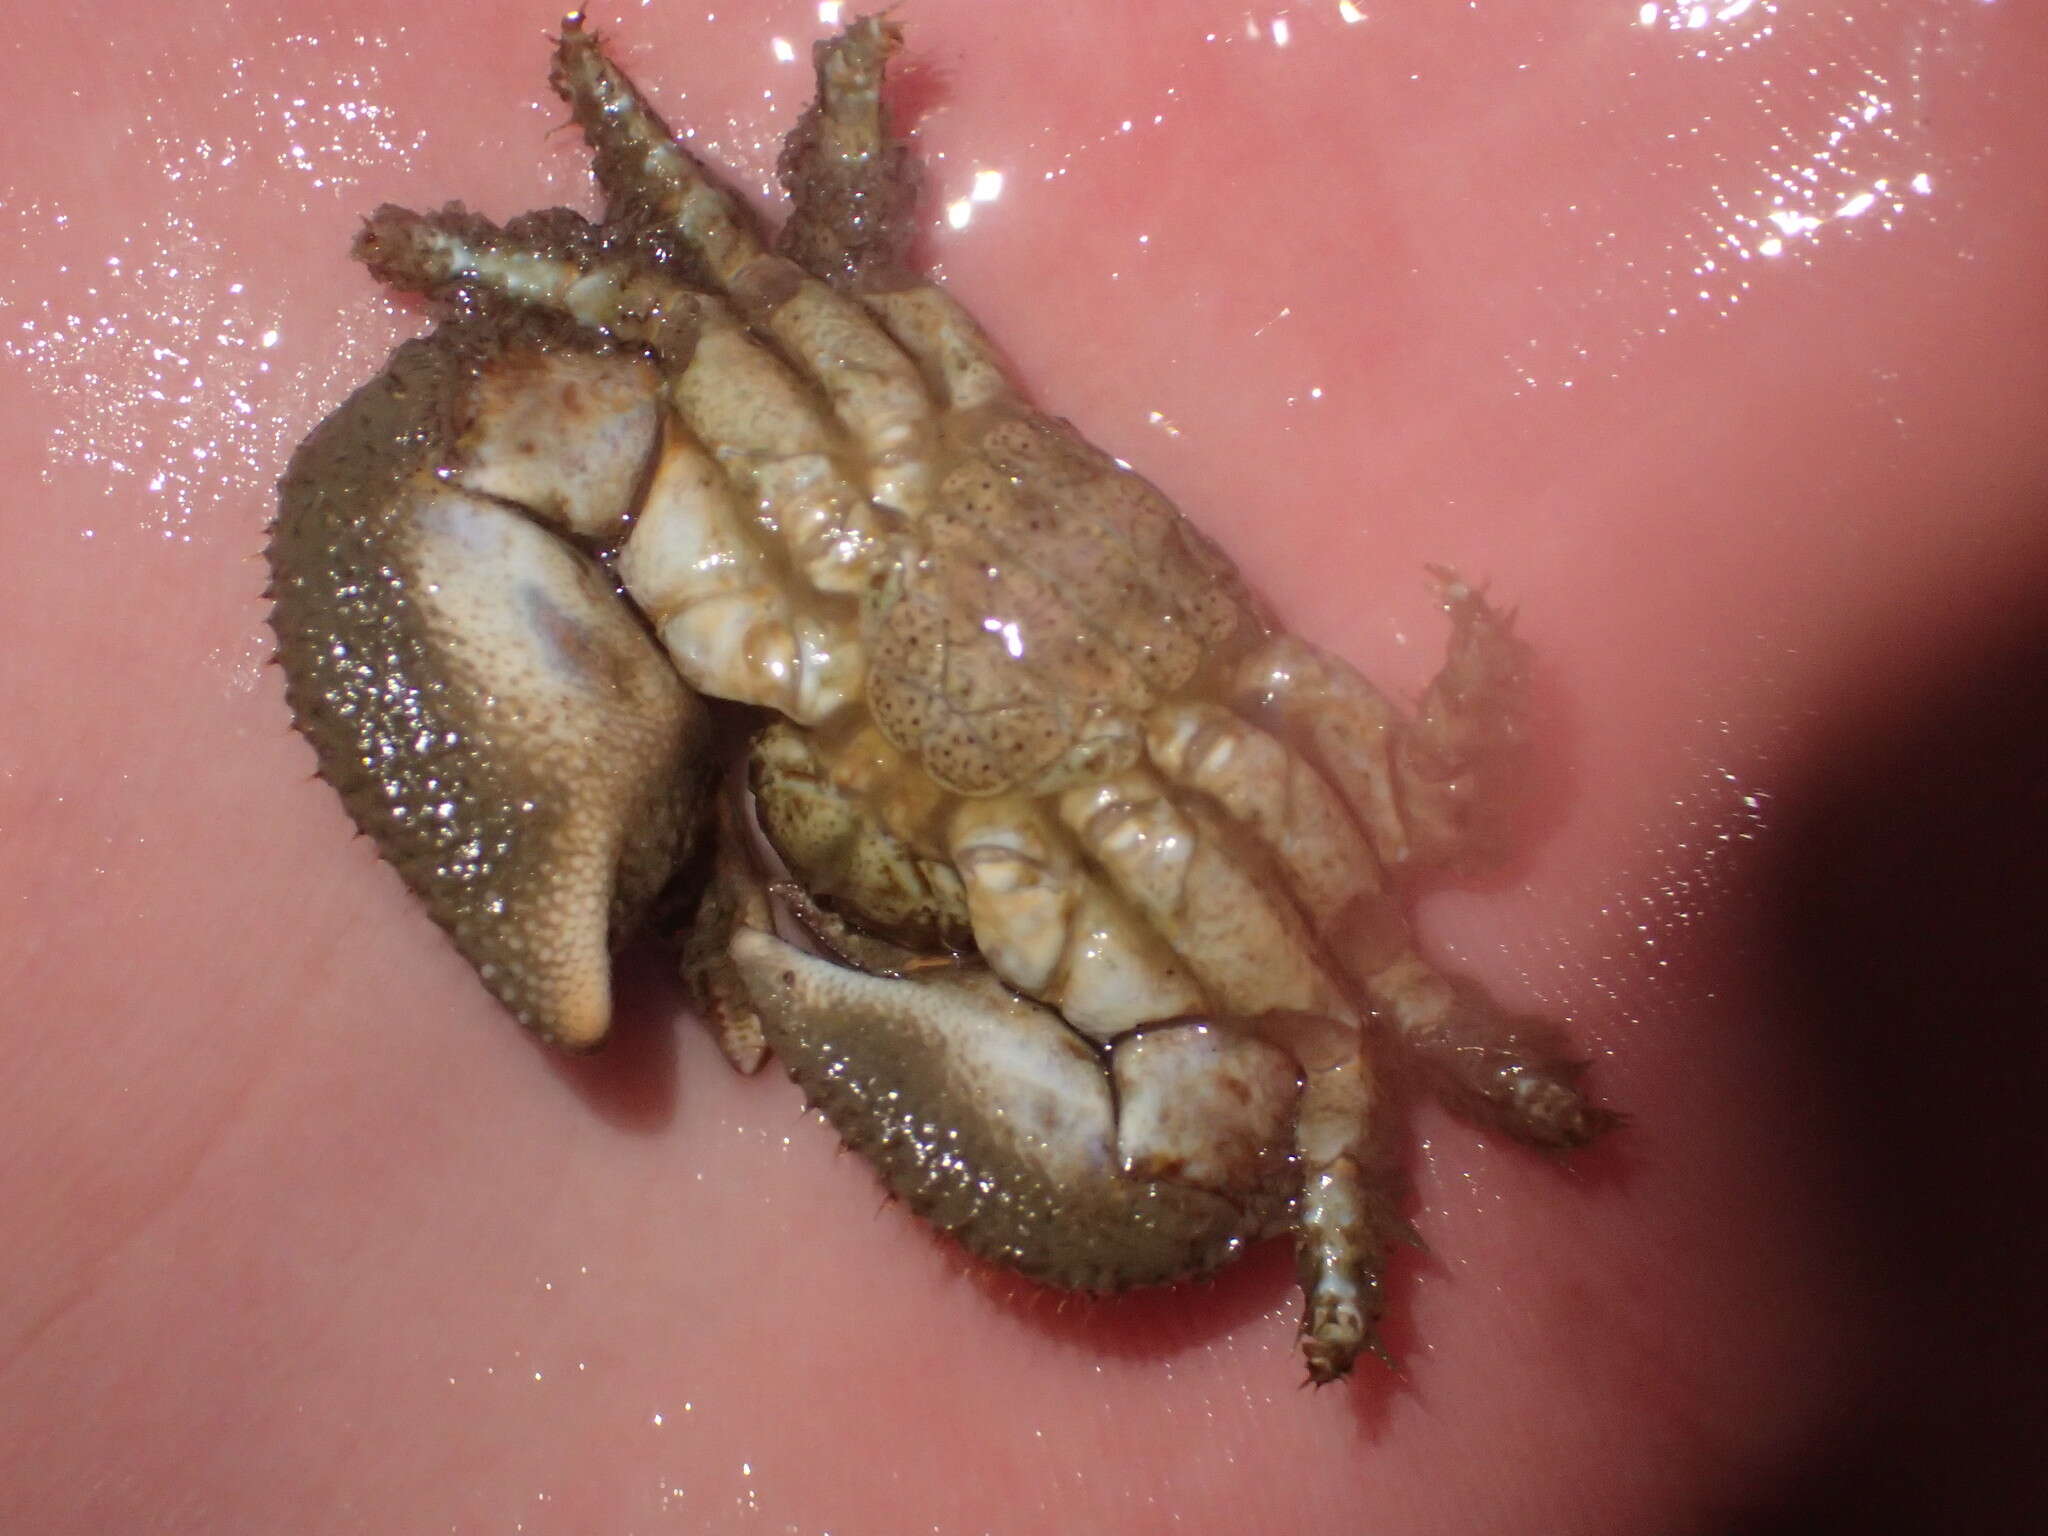 Image of pubescent porcelain crab